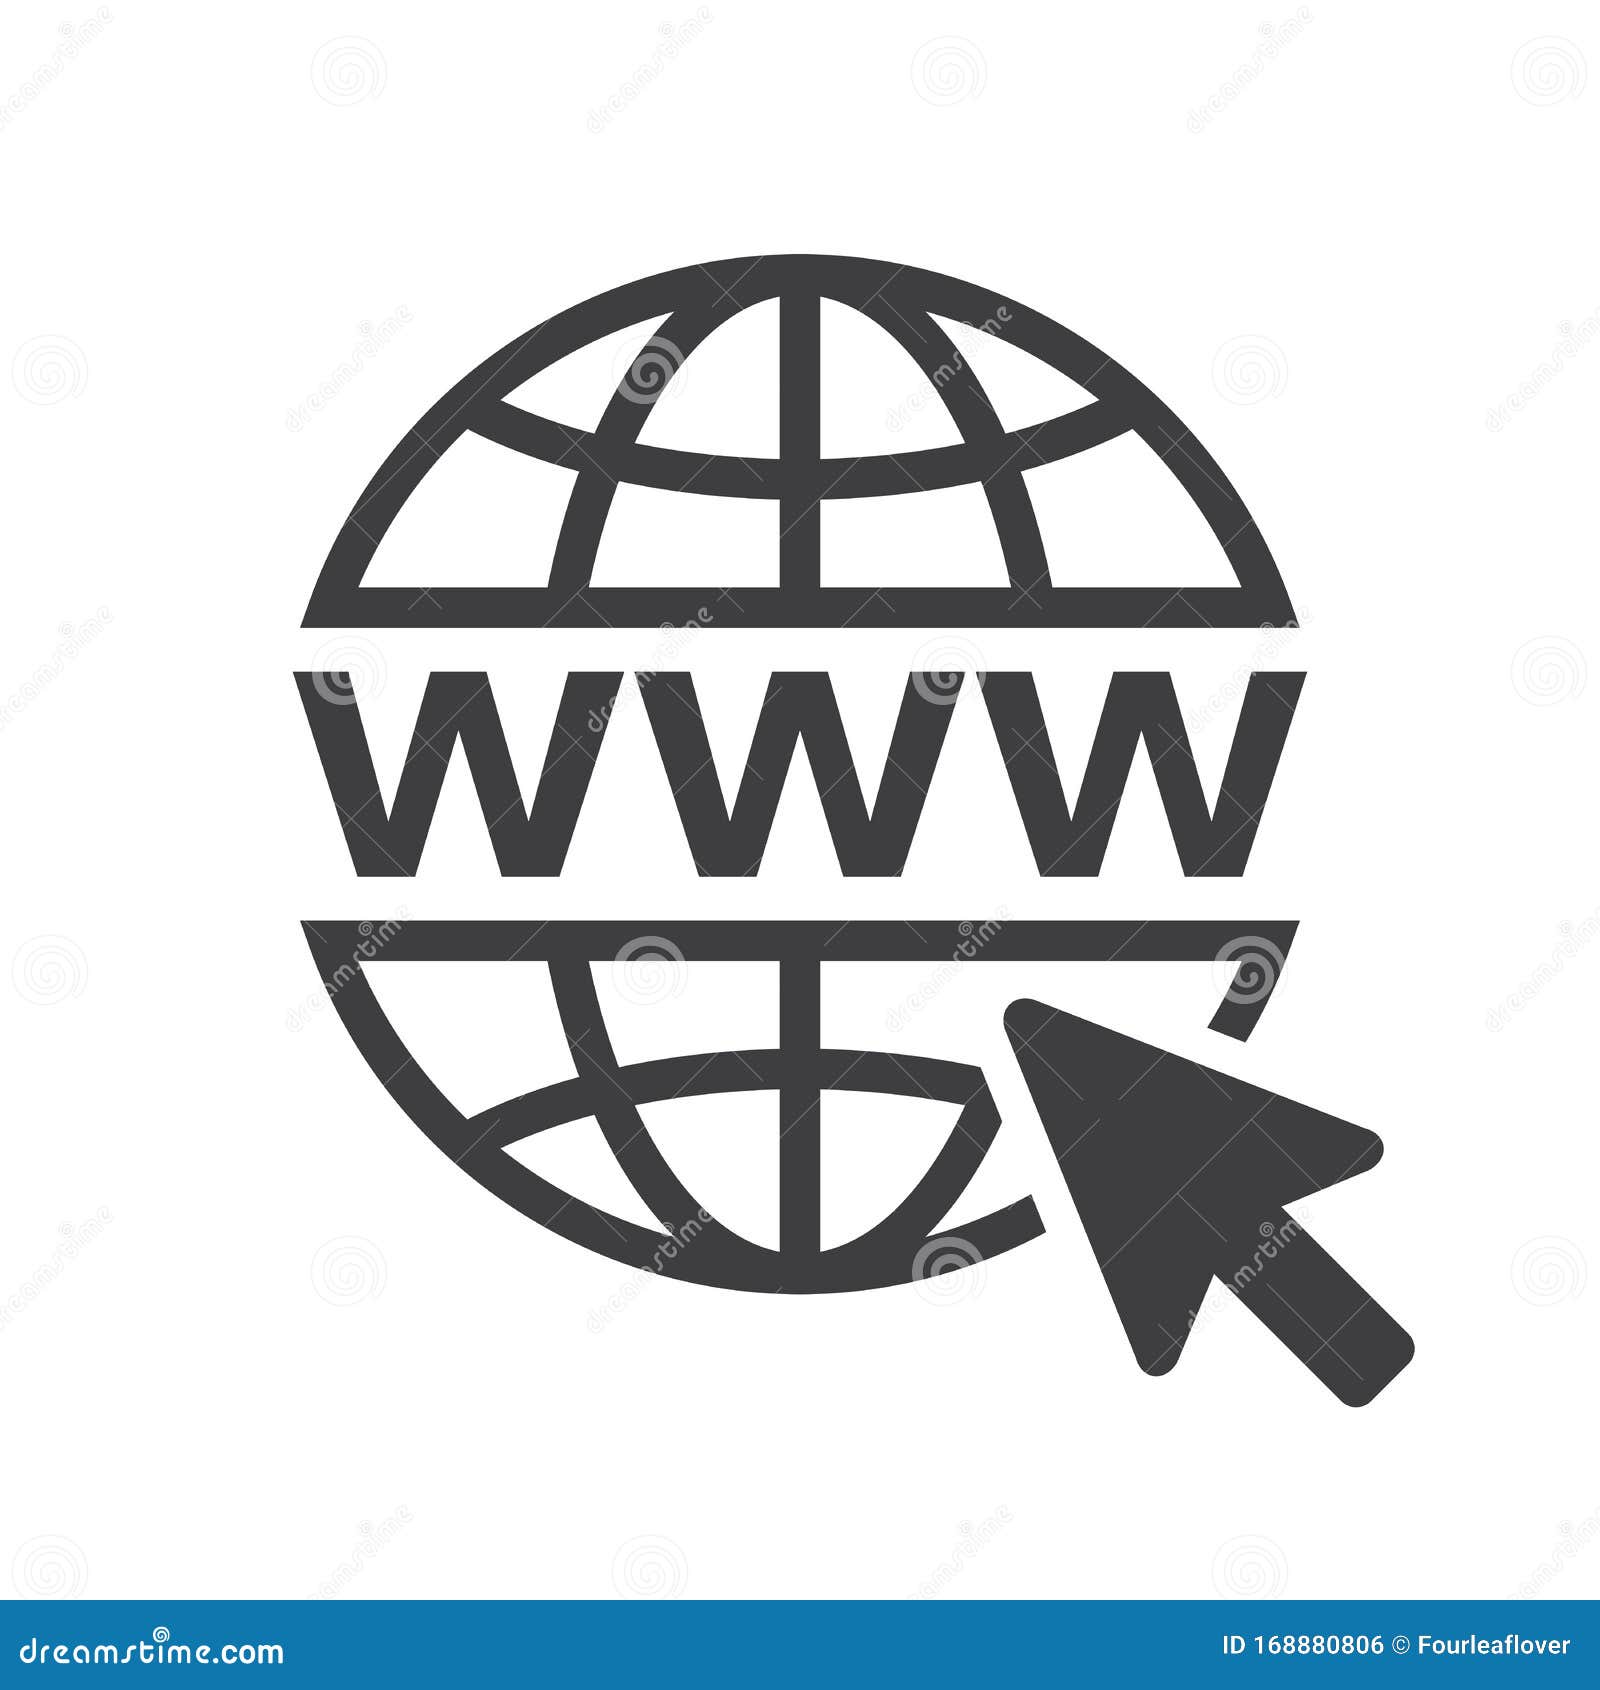 black website www icon with wireframe globe on white background